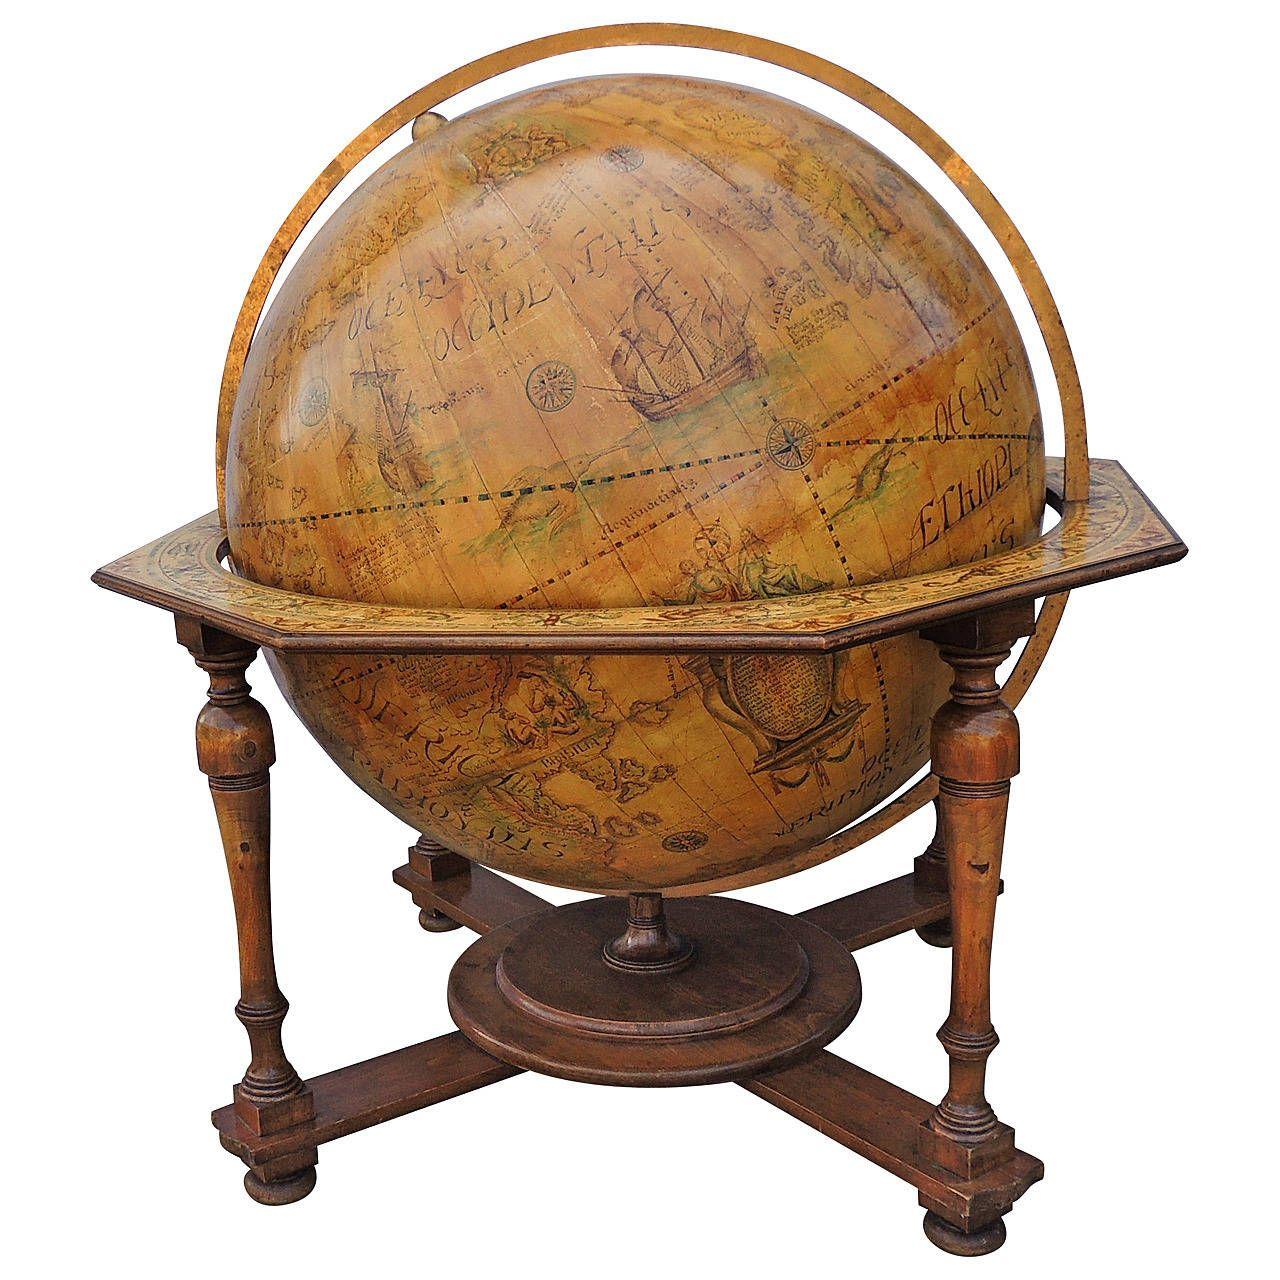 Antique World Globe Logo - Monumental Vintage World Globe with Celestial Markings in Beautiful